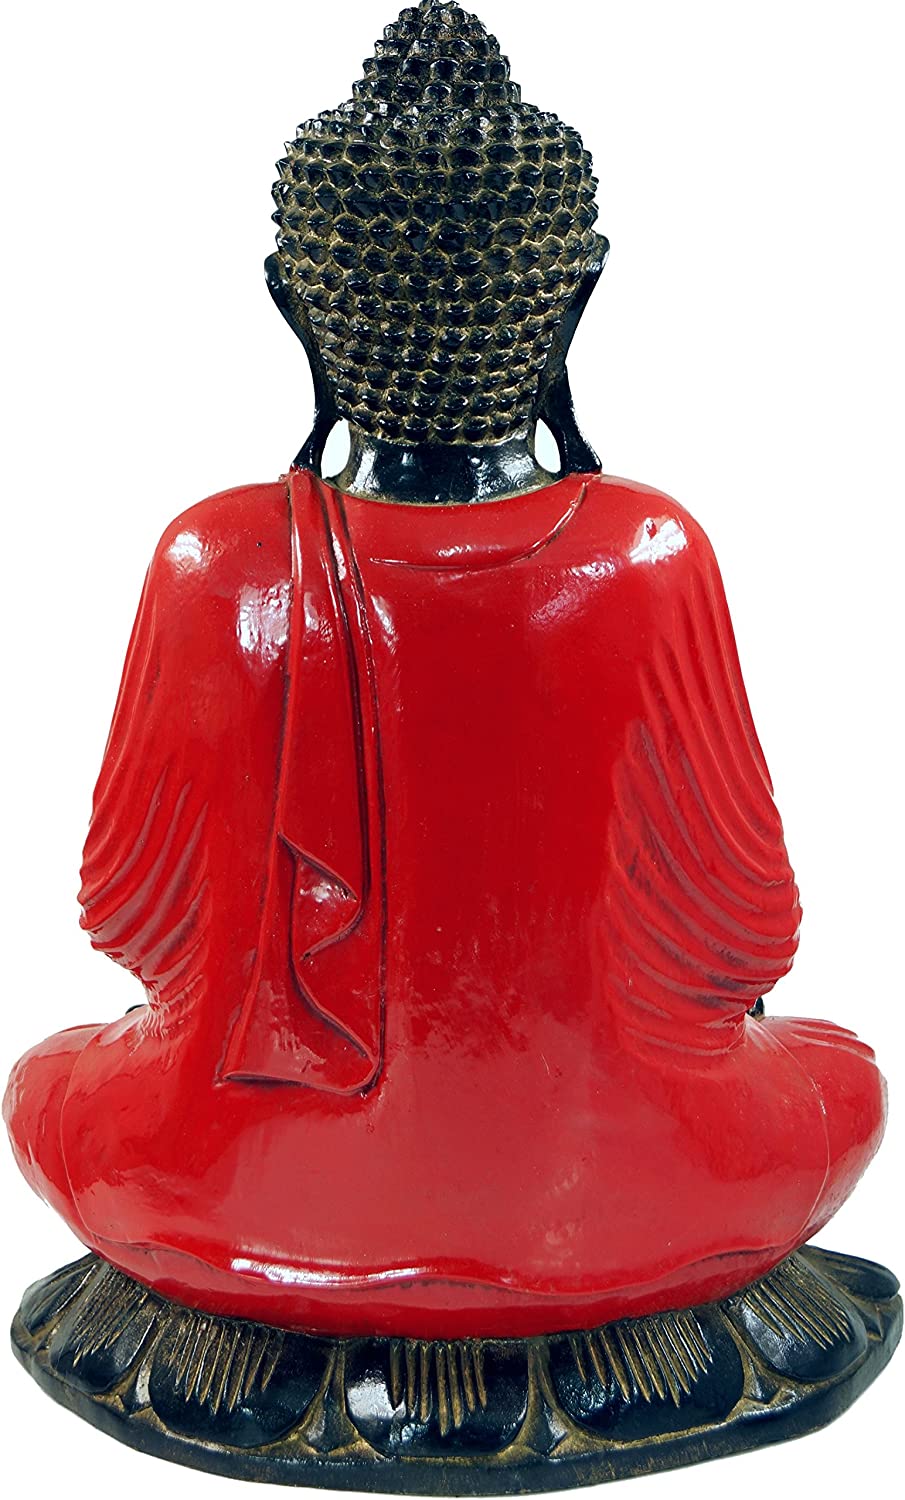 GURU SHOP Carved Sitting Buddha in Anjali Mudra - Red, 50 x 35 x 17 cm, Buddha